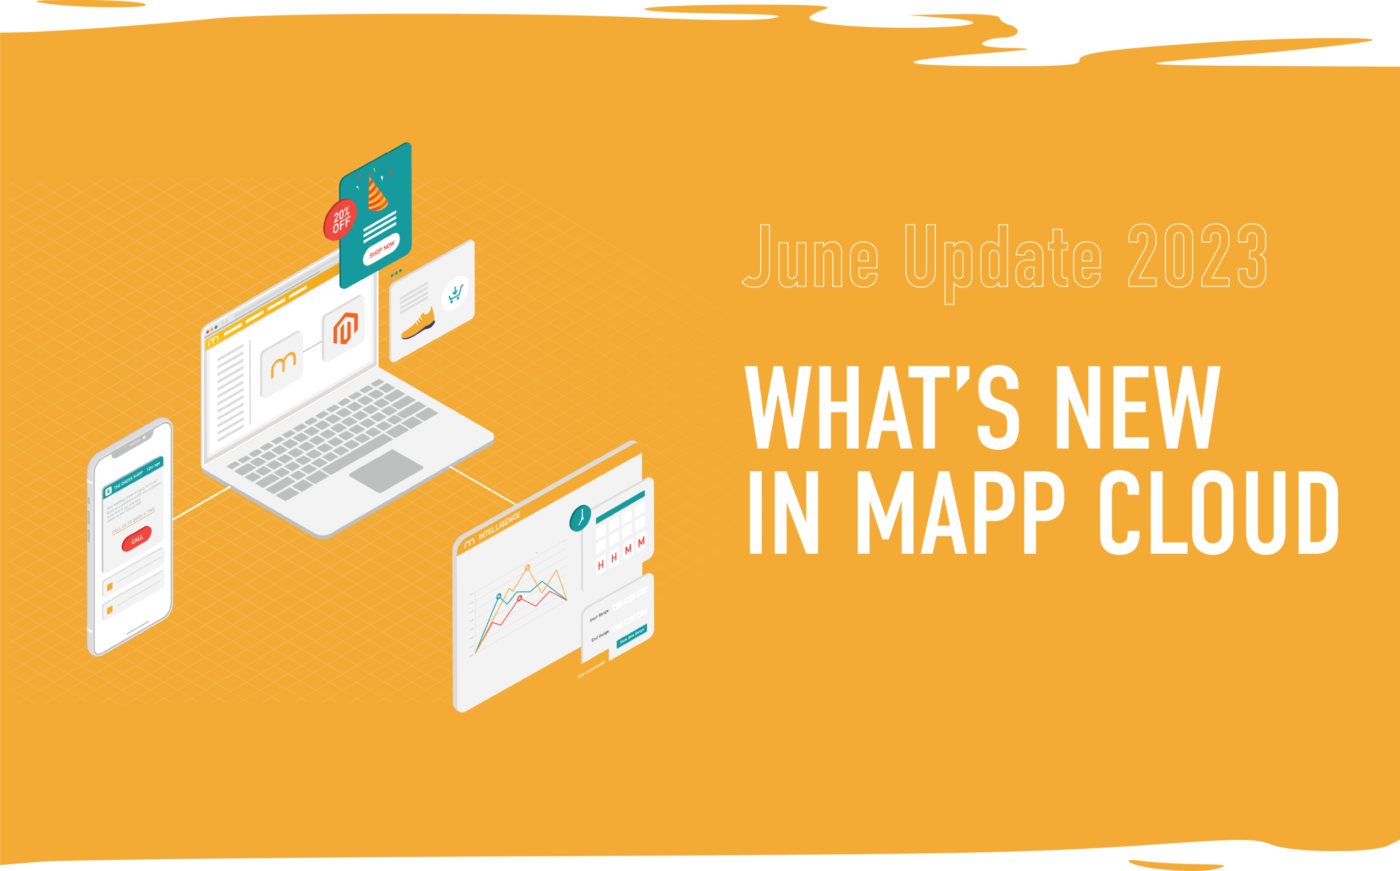 Mapp Cloud June Update 2023